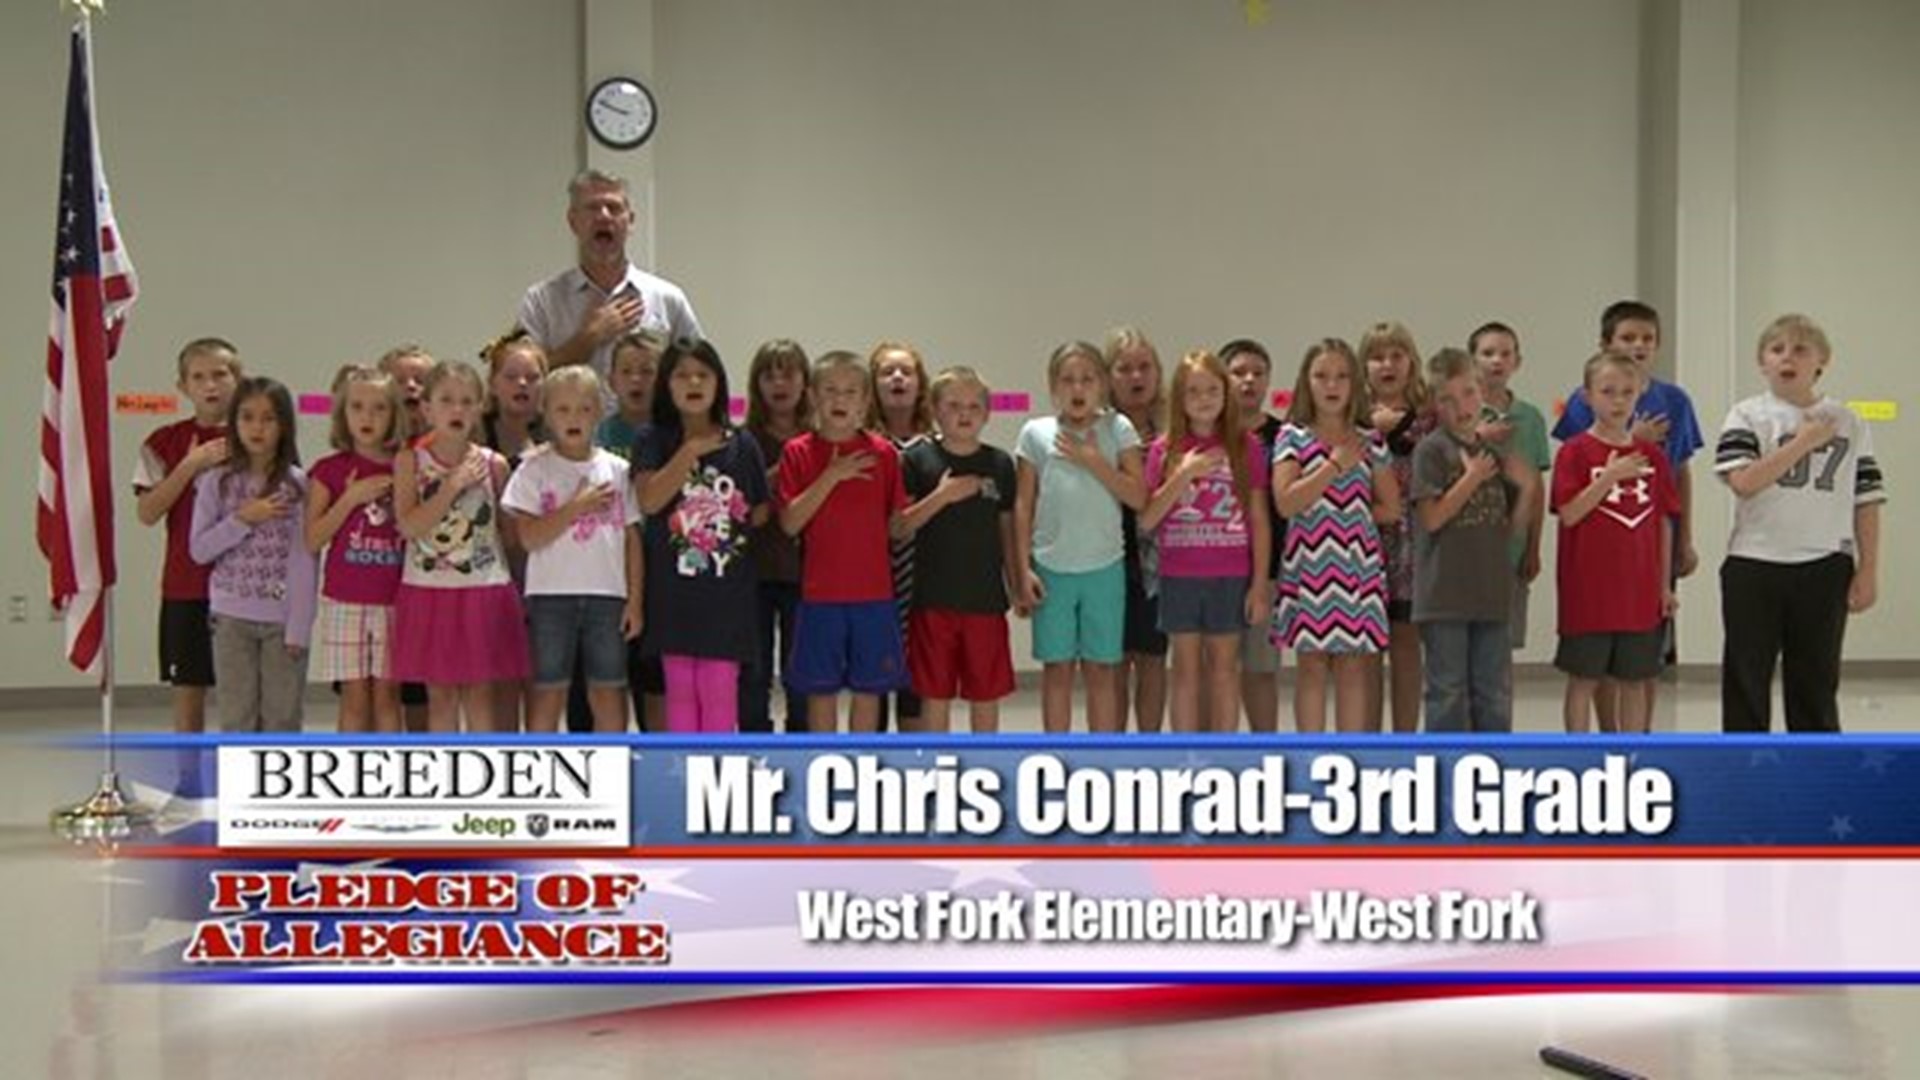 West Fork Elementary, West Fork - Mr. Chris Conrad - 3rd Grade